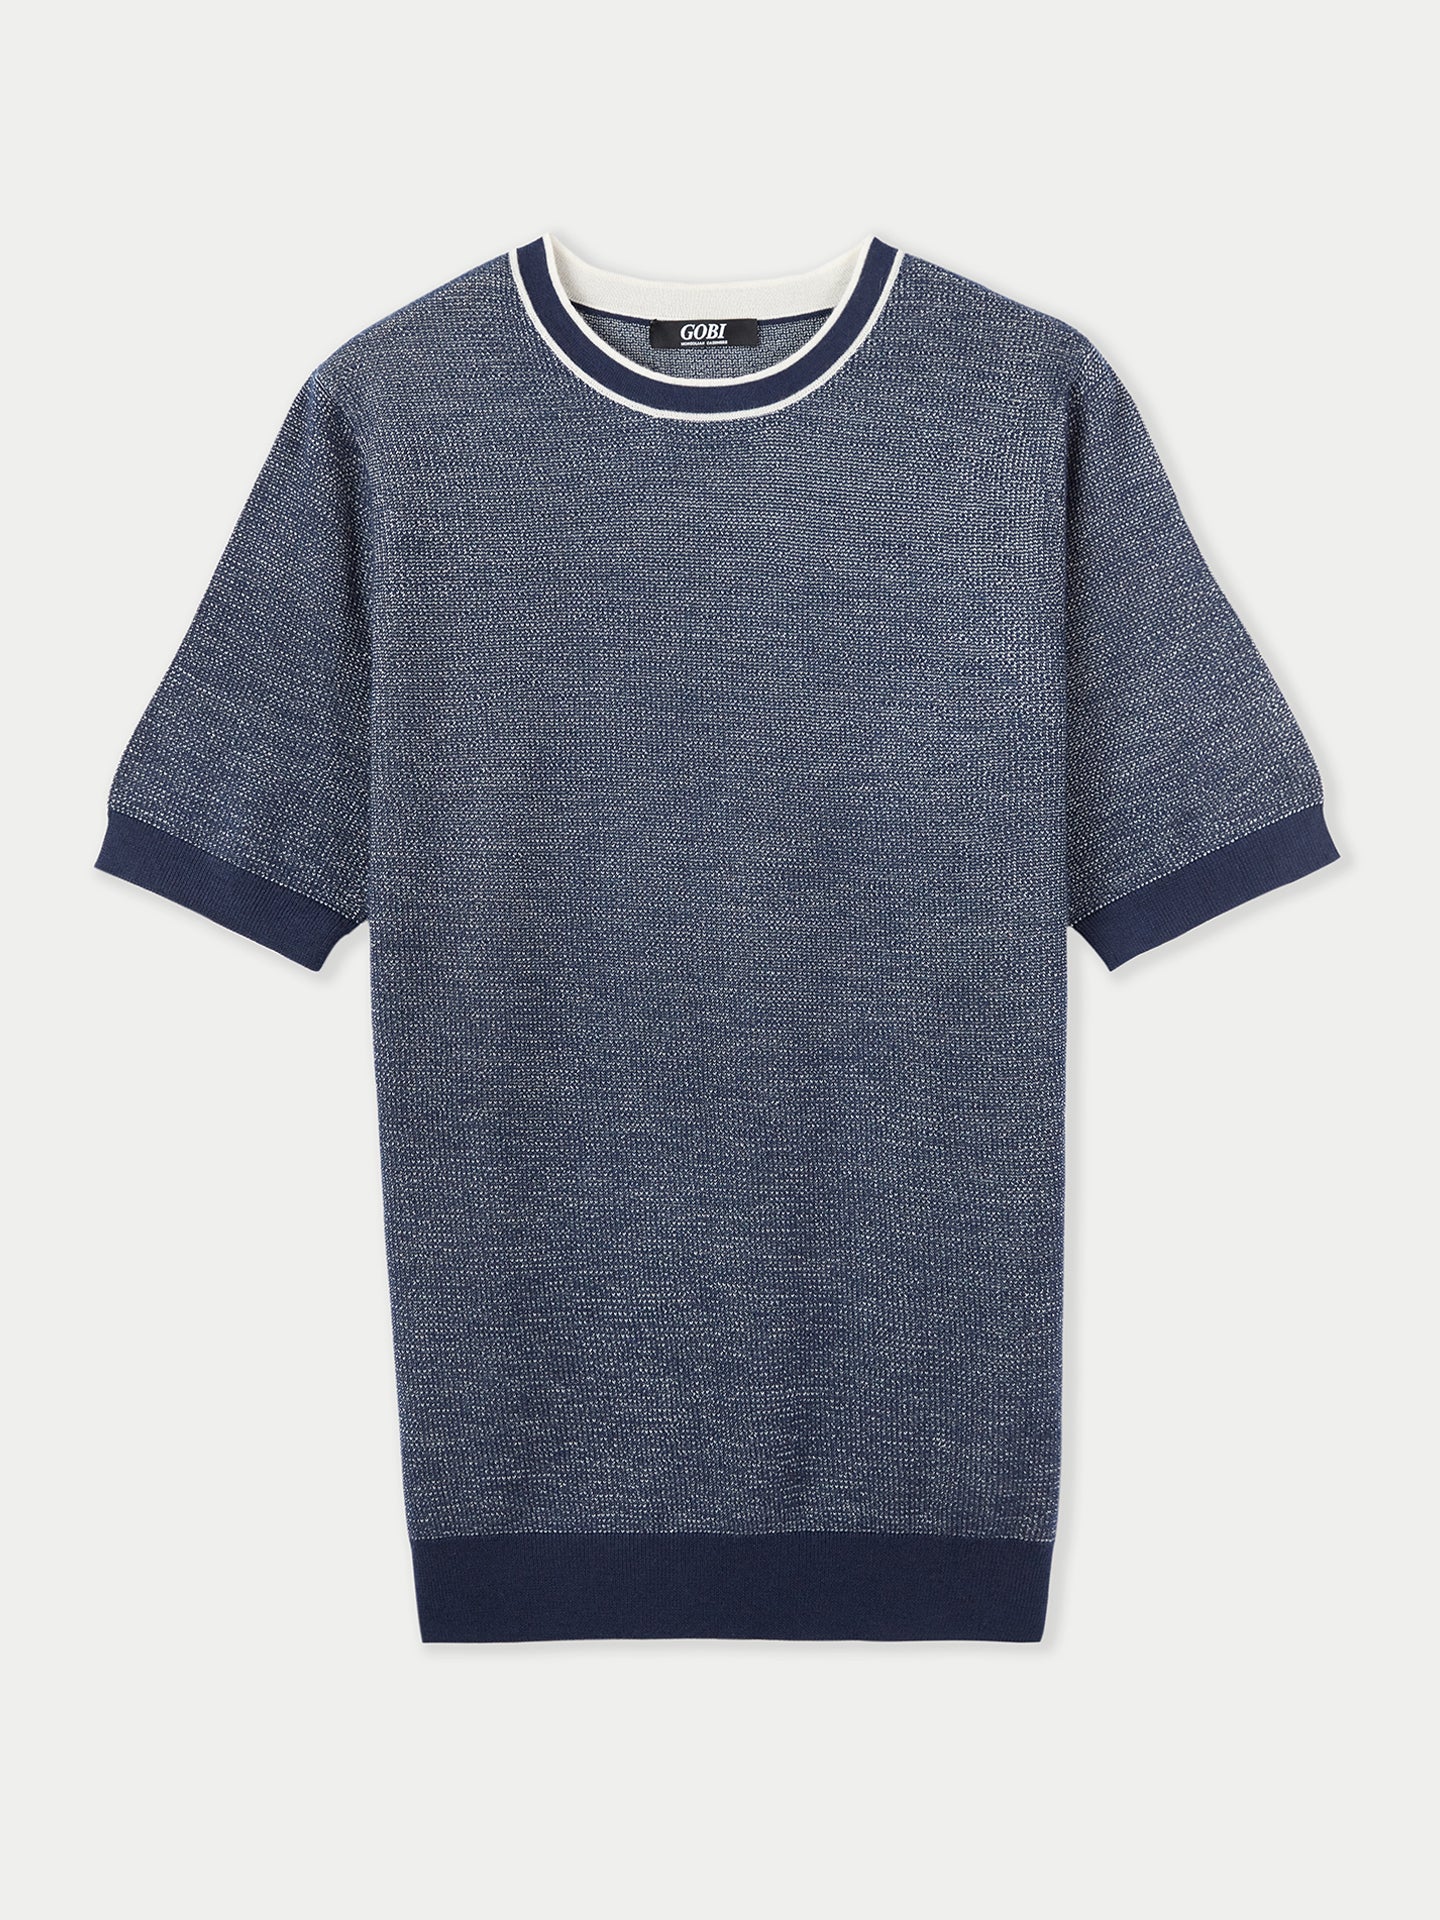 Men's Silk Cashmere Jacquard Knit T-shirt Navy - Gobi Cashmere